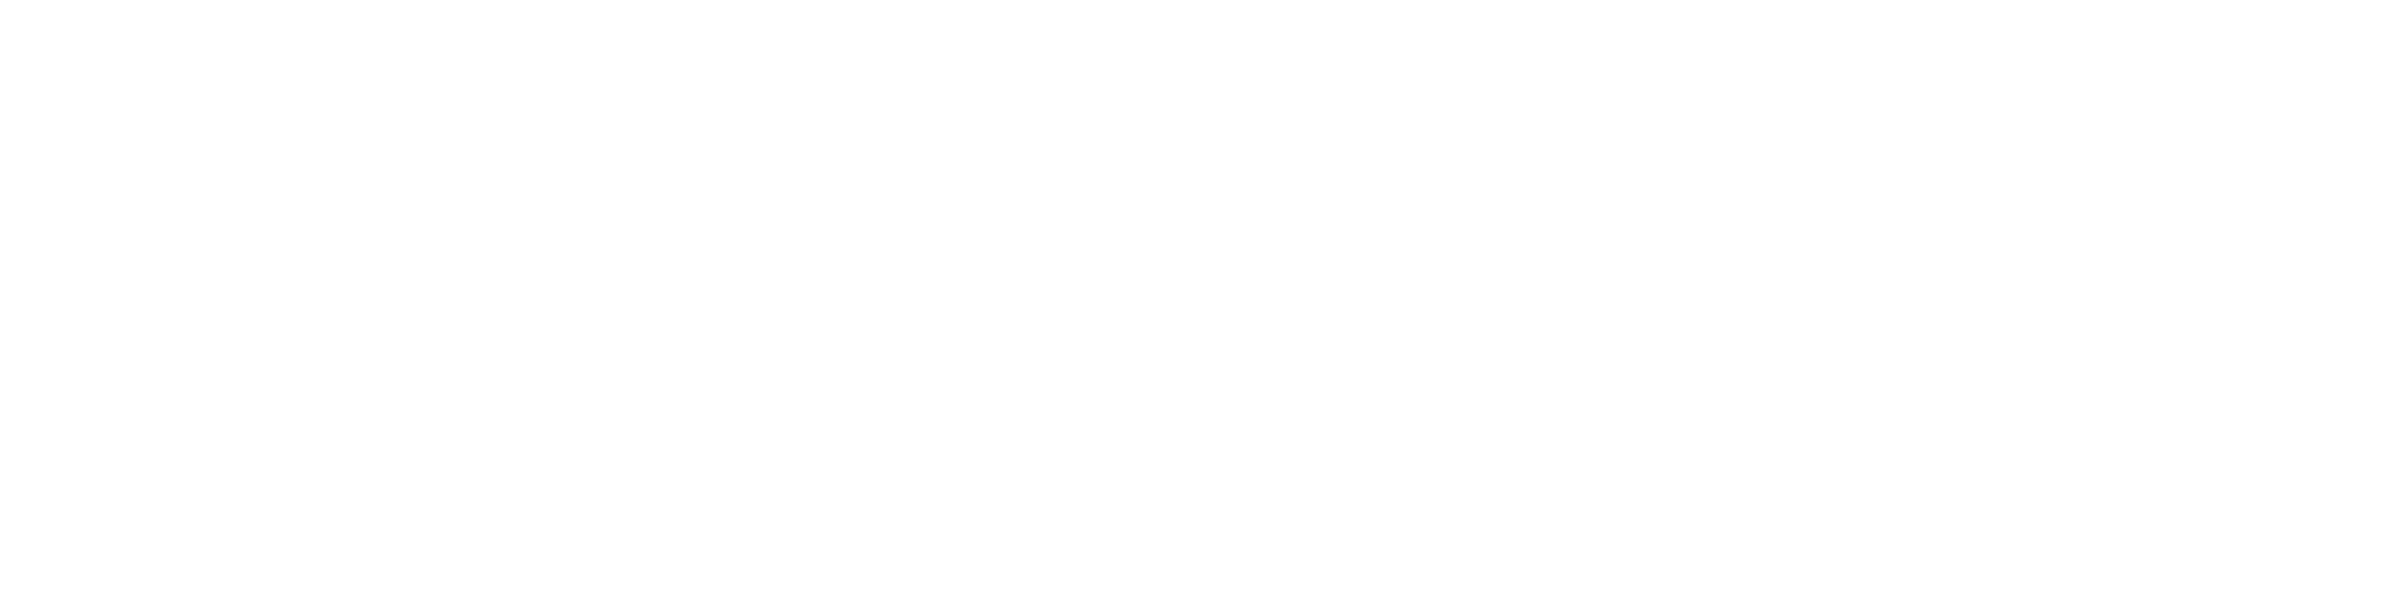 https://wildfireready.dnr.wa.gov/wp-content/uploads/2022/03/em_dnr_logo_white_long1.png